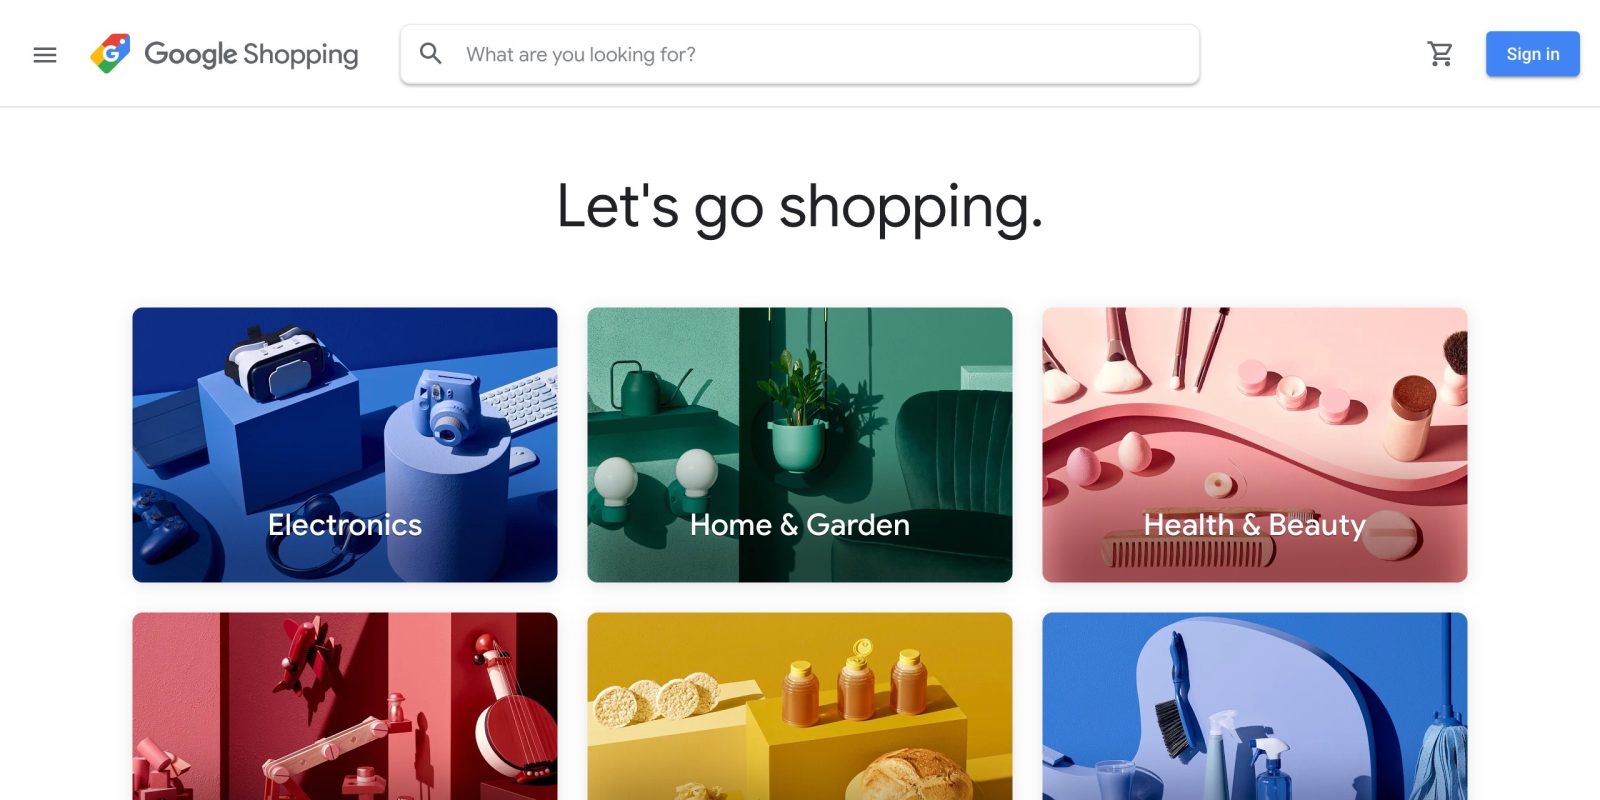 Google Shopping homepage live